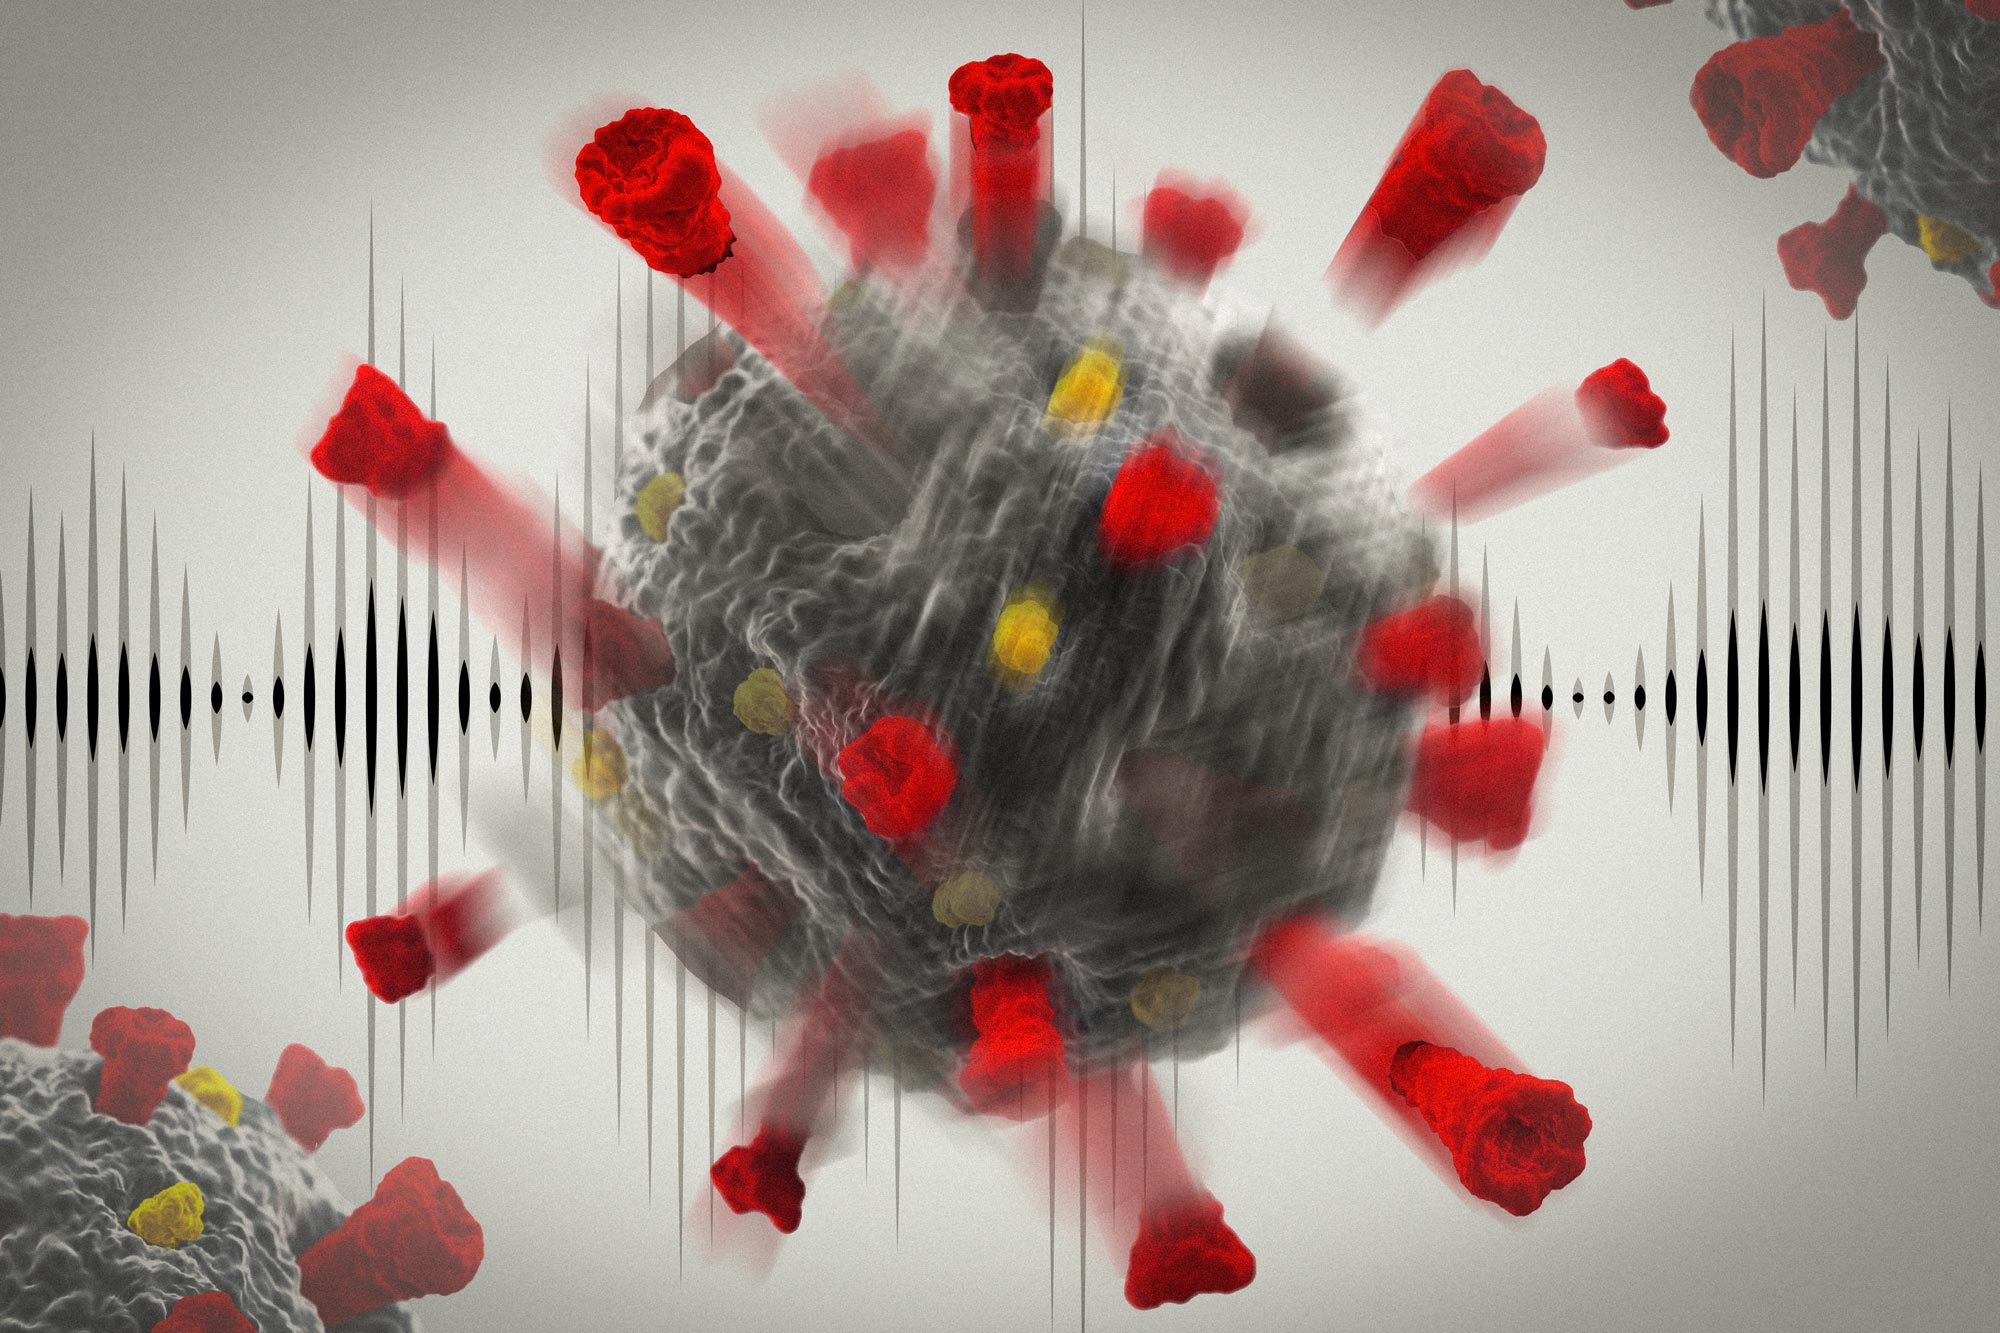 MIT says ultrasound can damage coronaviruses